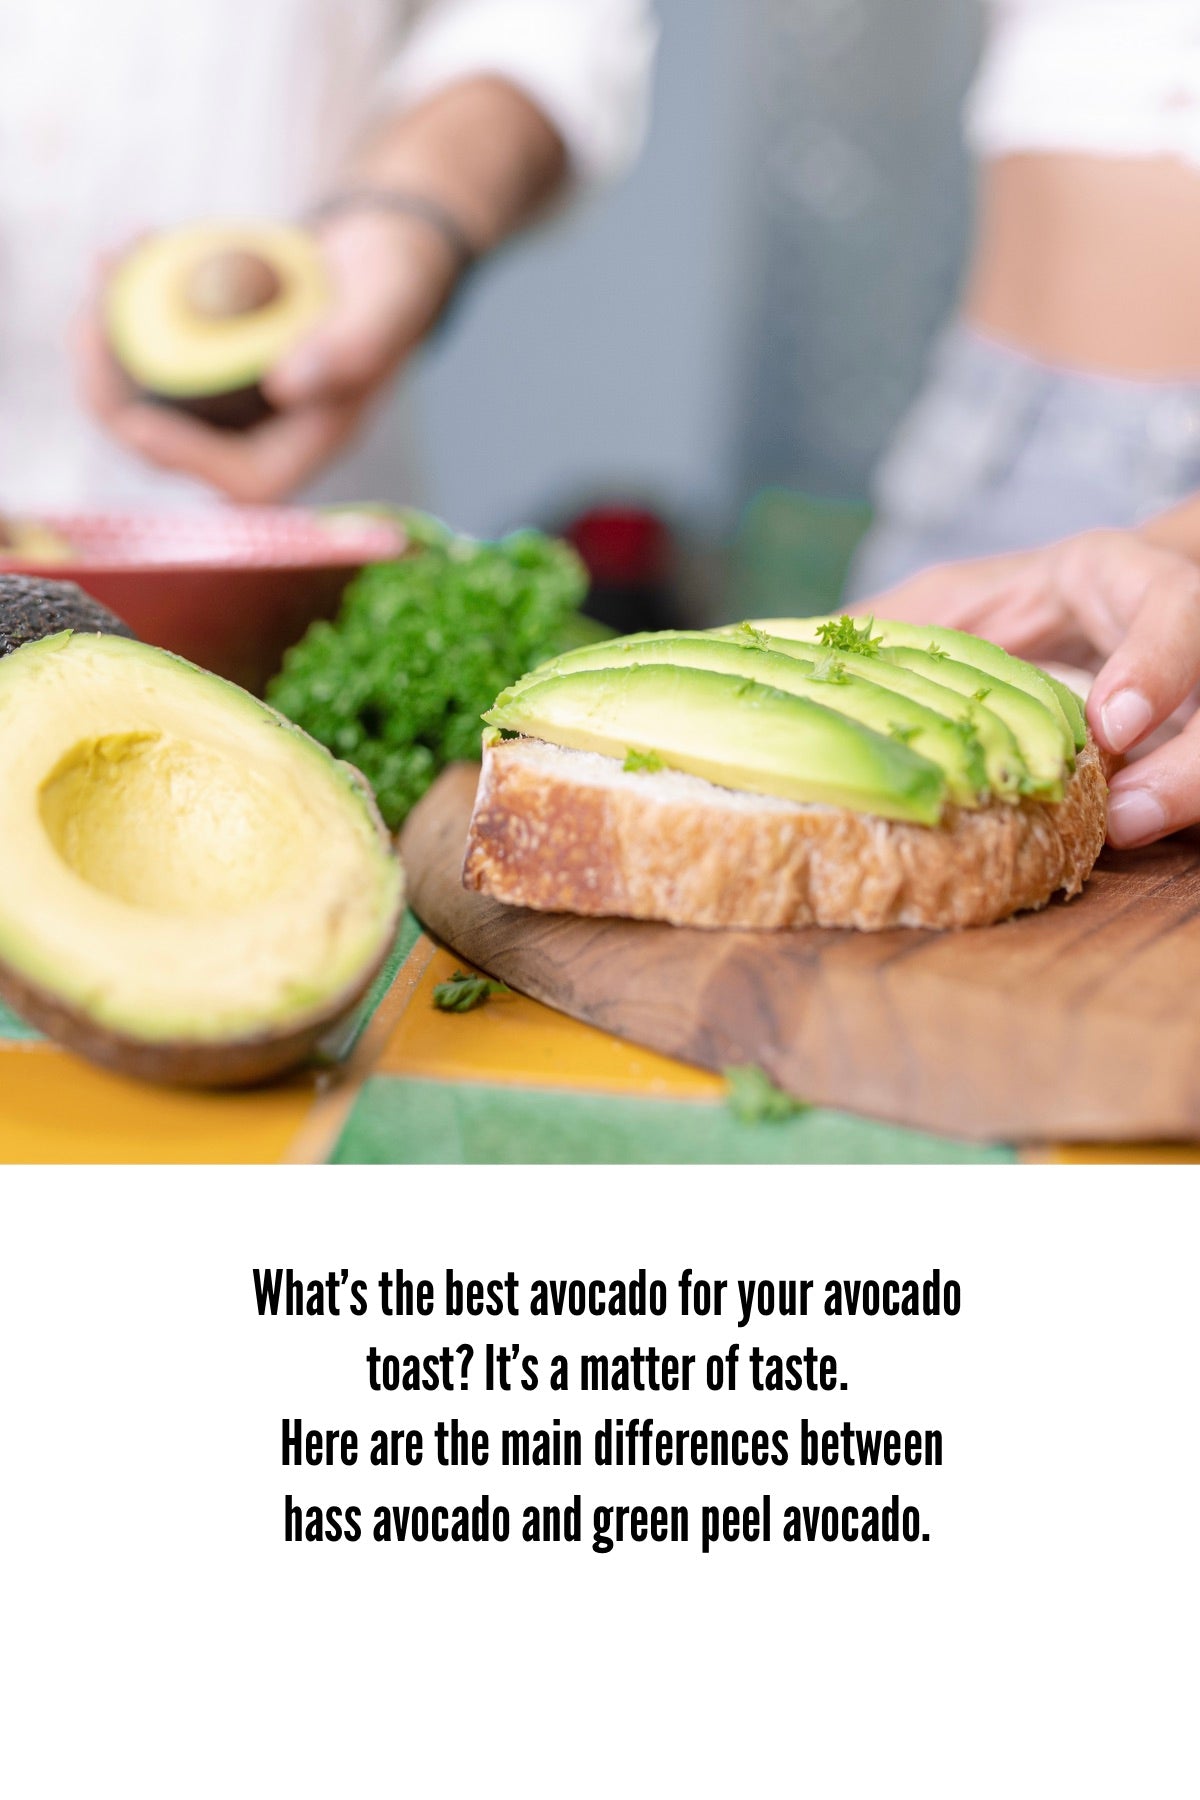 What is the best avocado for your avocado toast ? Green Peel Avocado Vs Hass Avocado